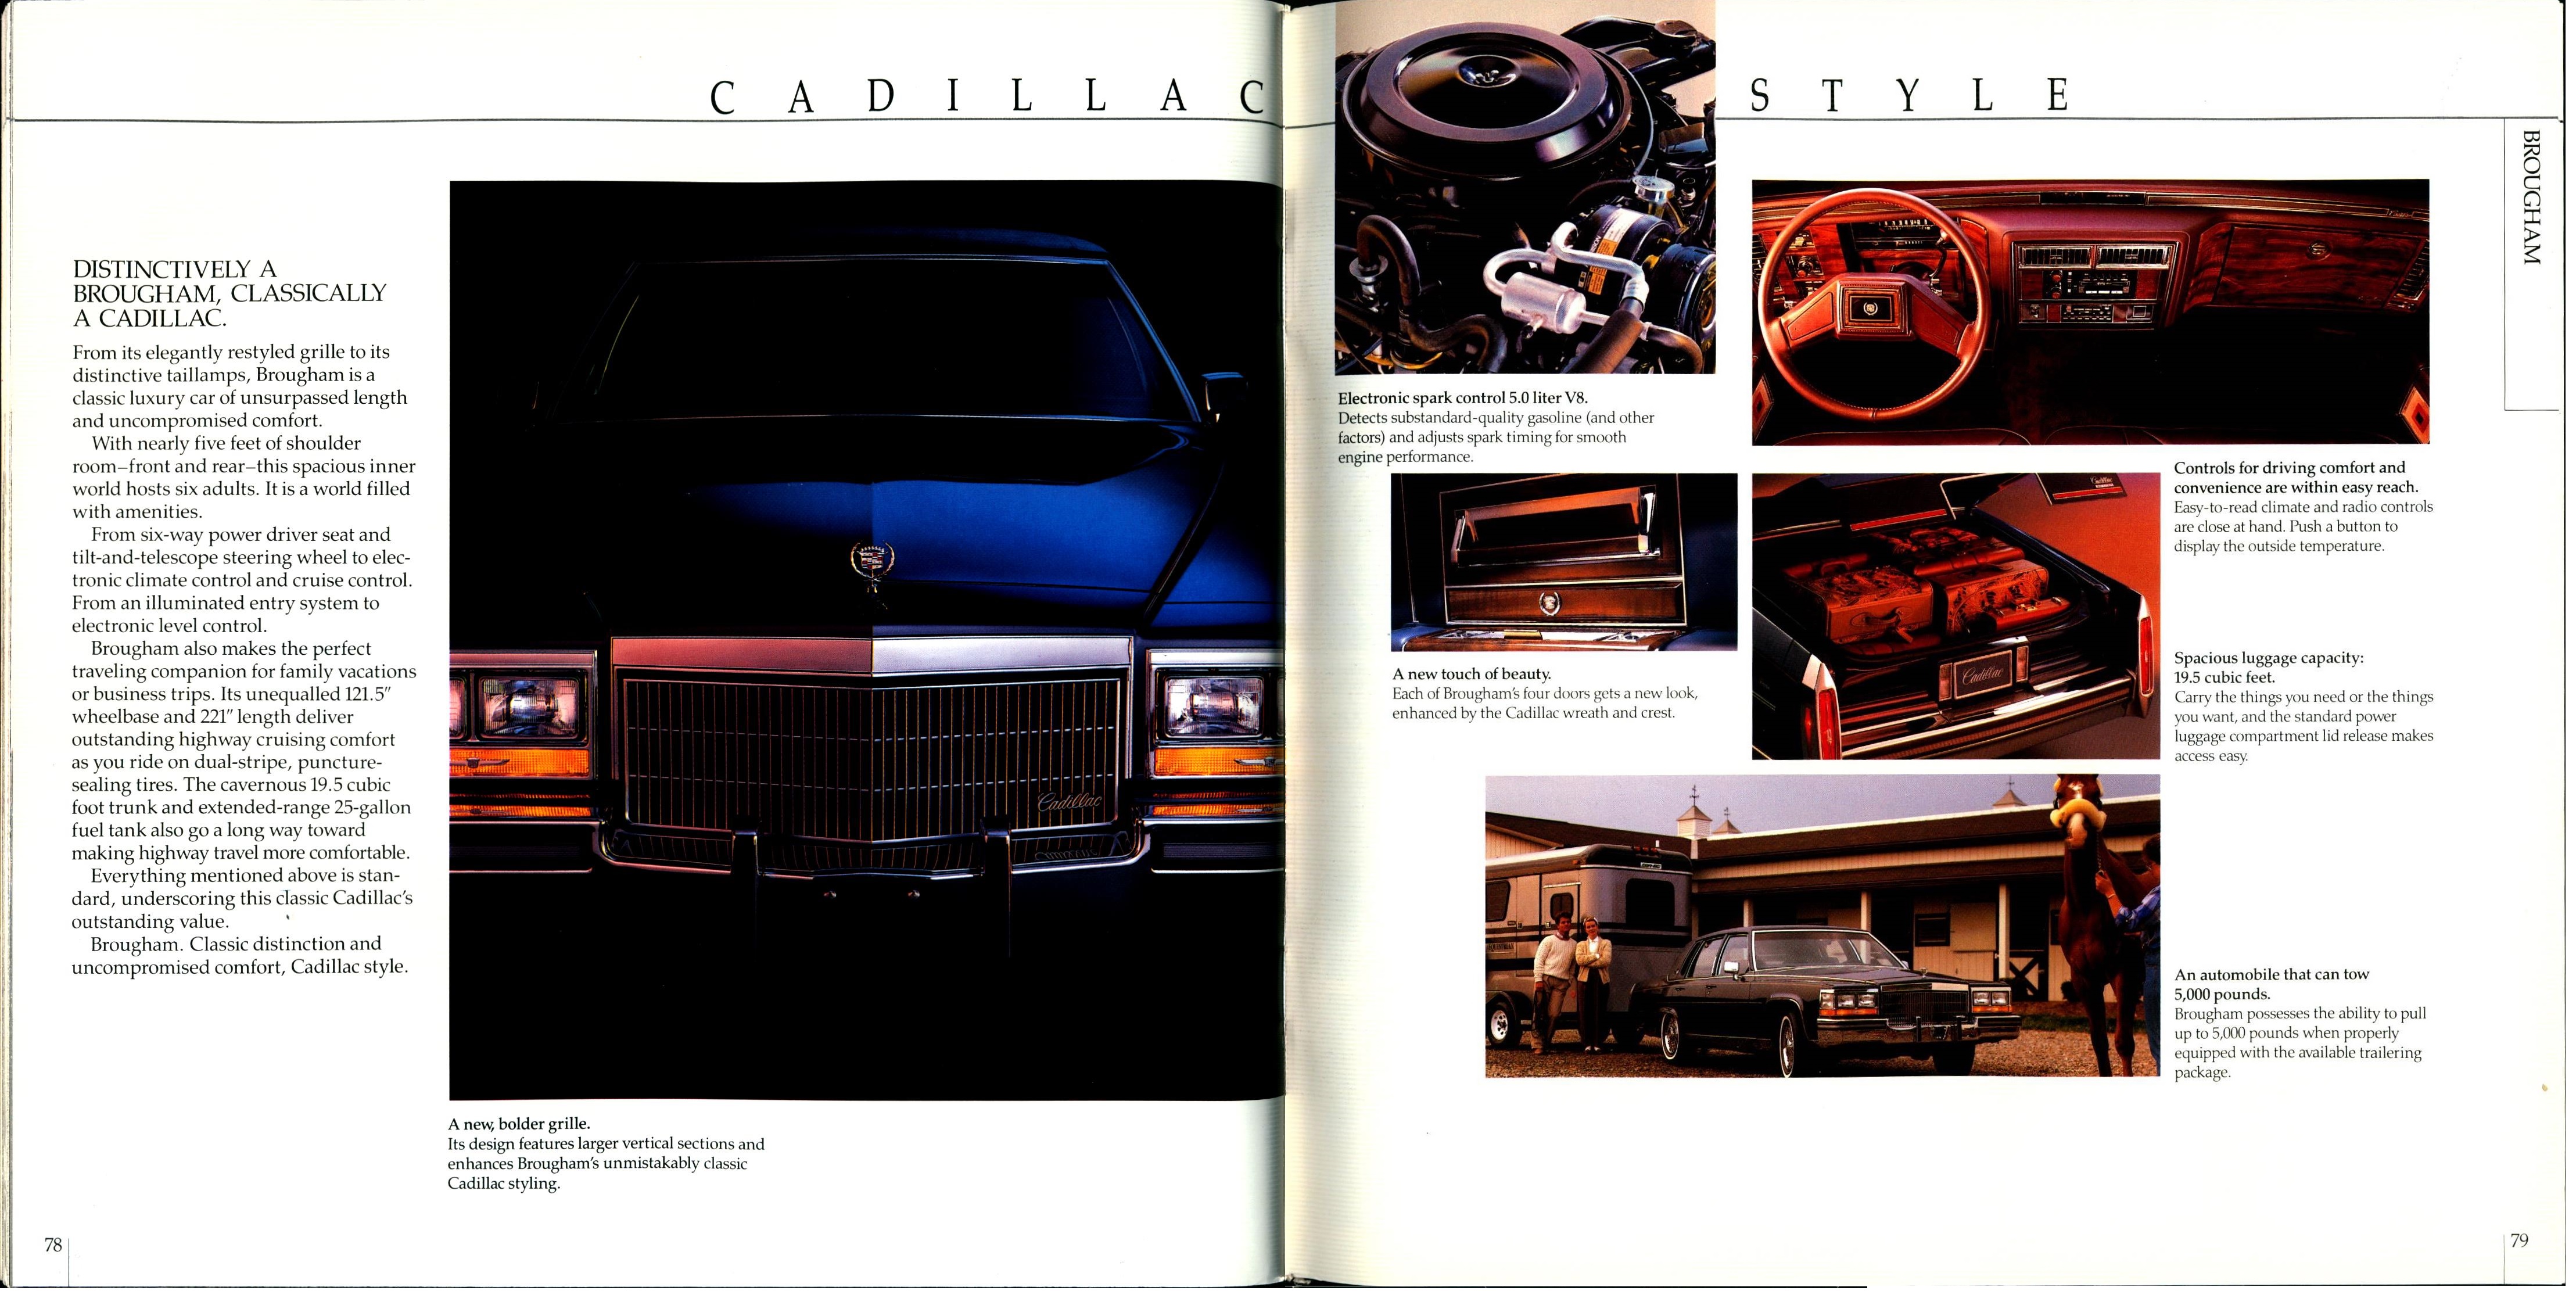 1989 Cadillac Full Line Prestige Brochure 78-79